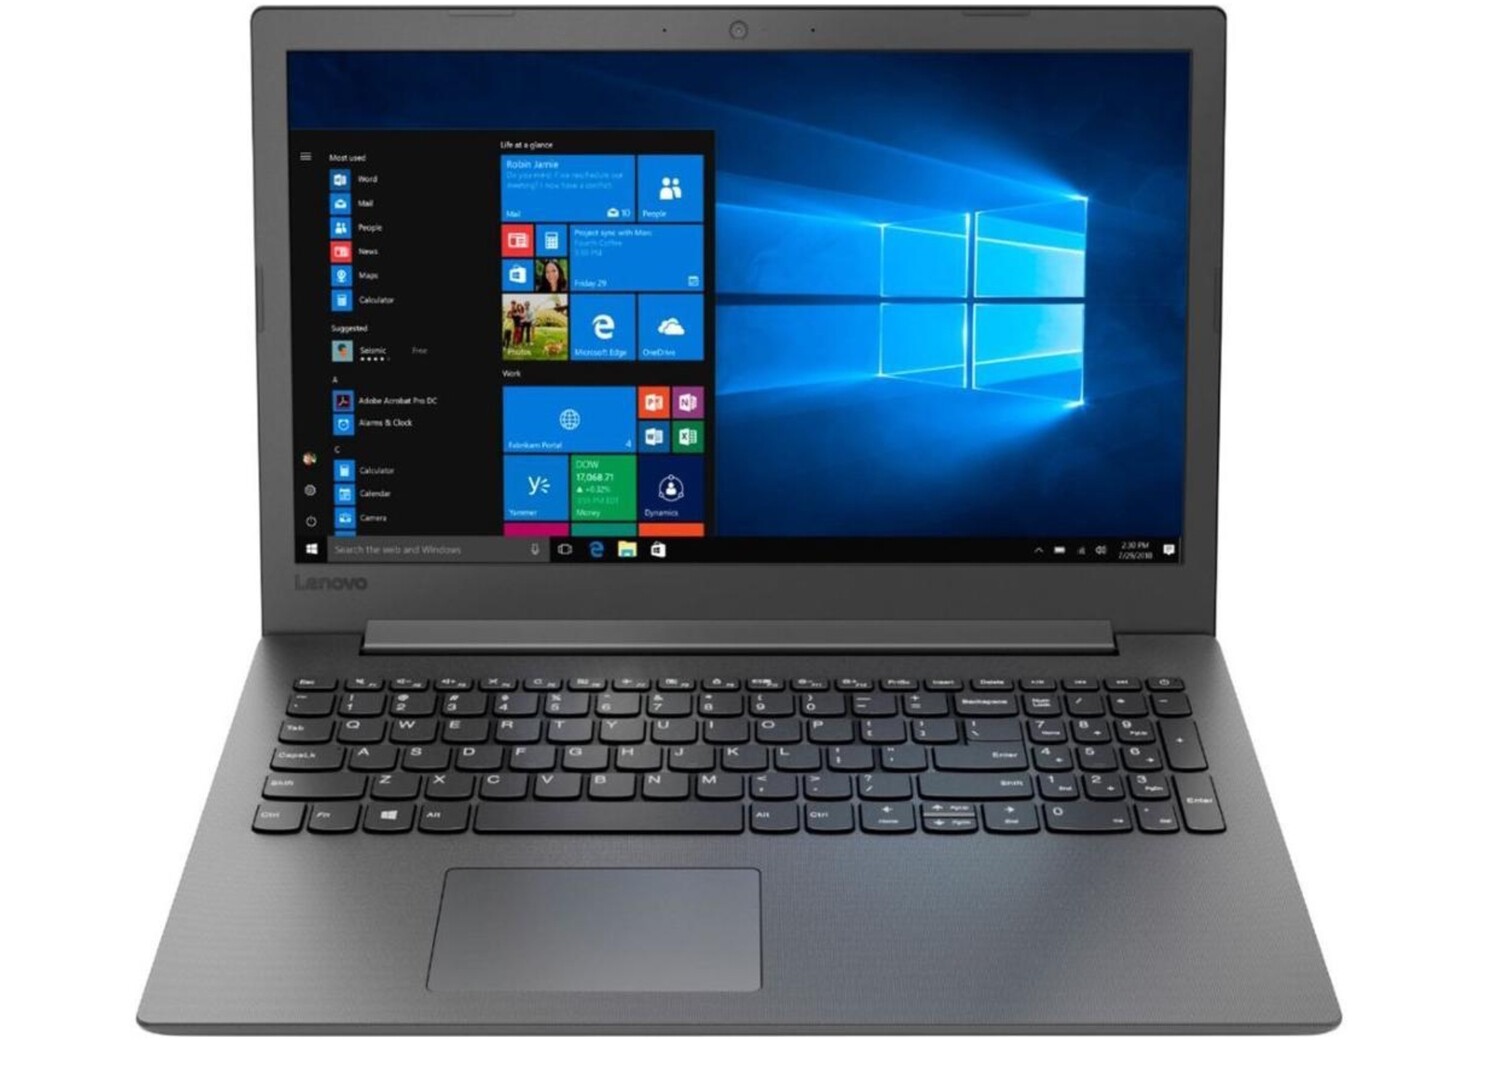 Lenovo 15.6" Laptop - AMD A9-Series - 4GB Memory - AMD Radeon R5 - 128GB Solid State Drive - Black - Windows 10 in S Mode